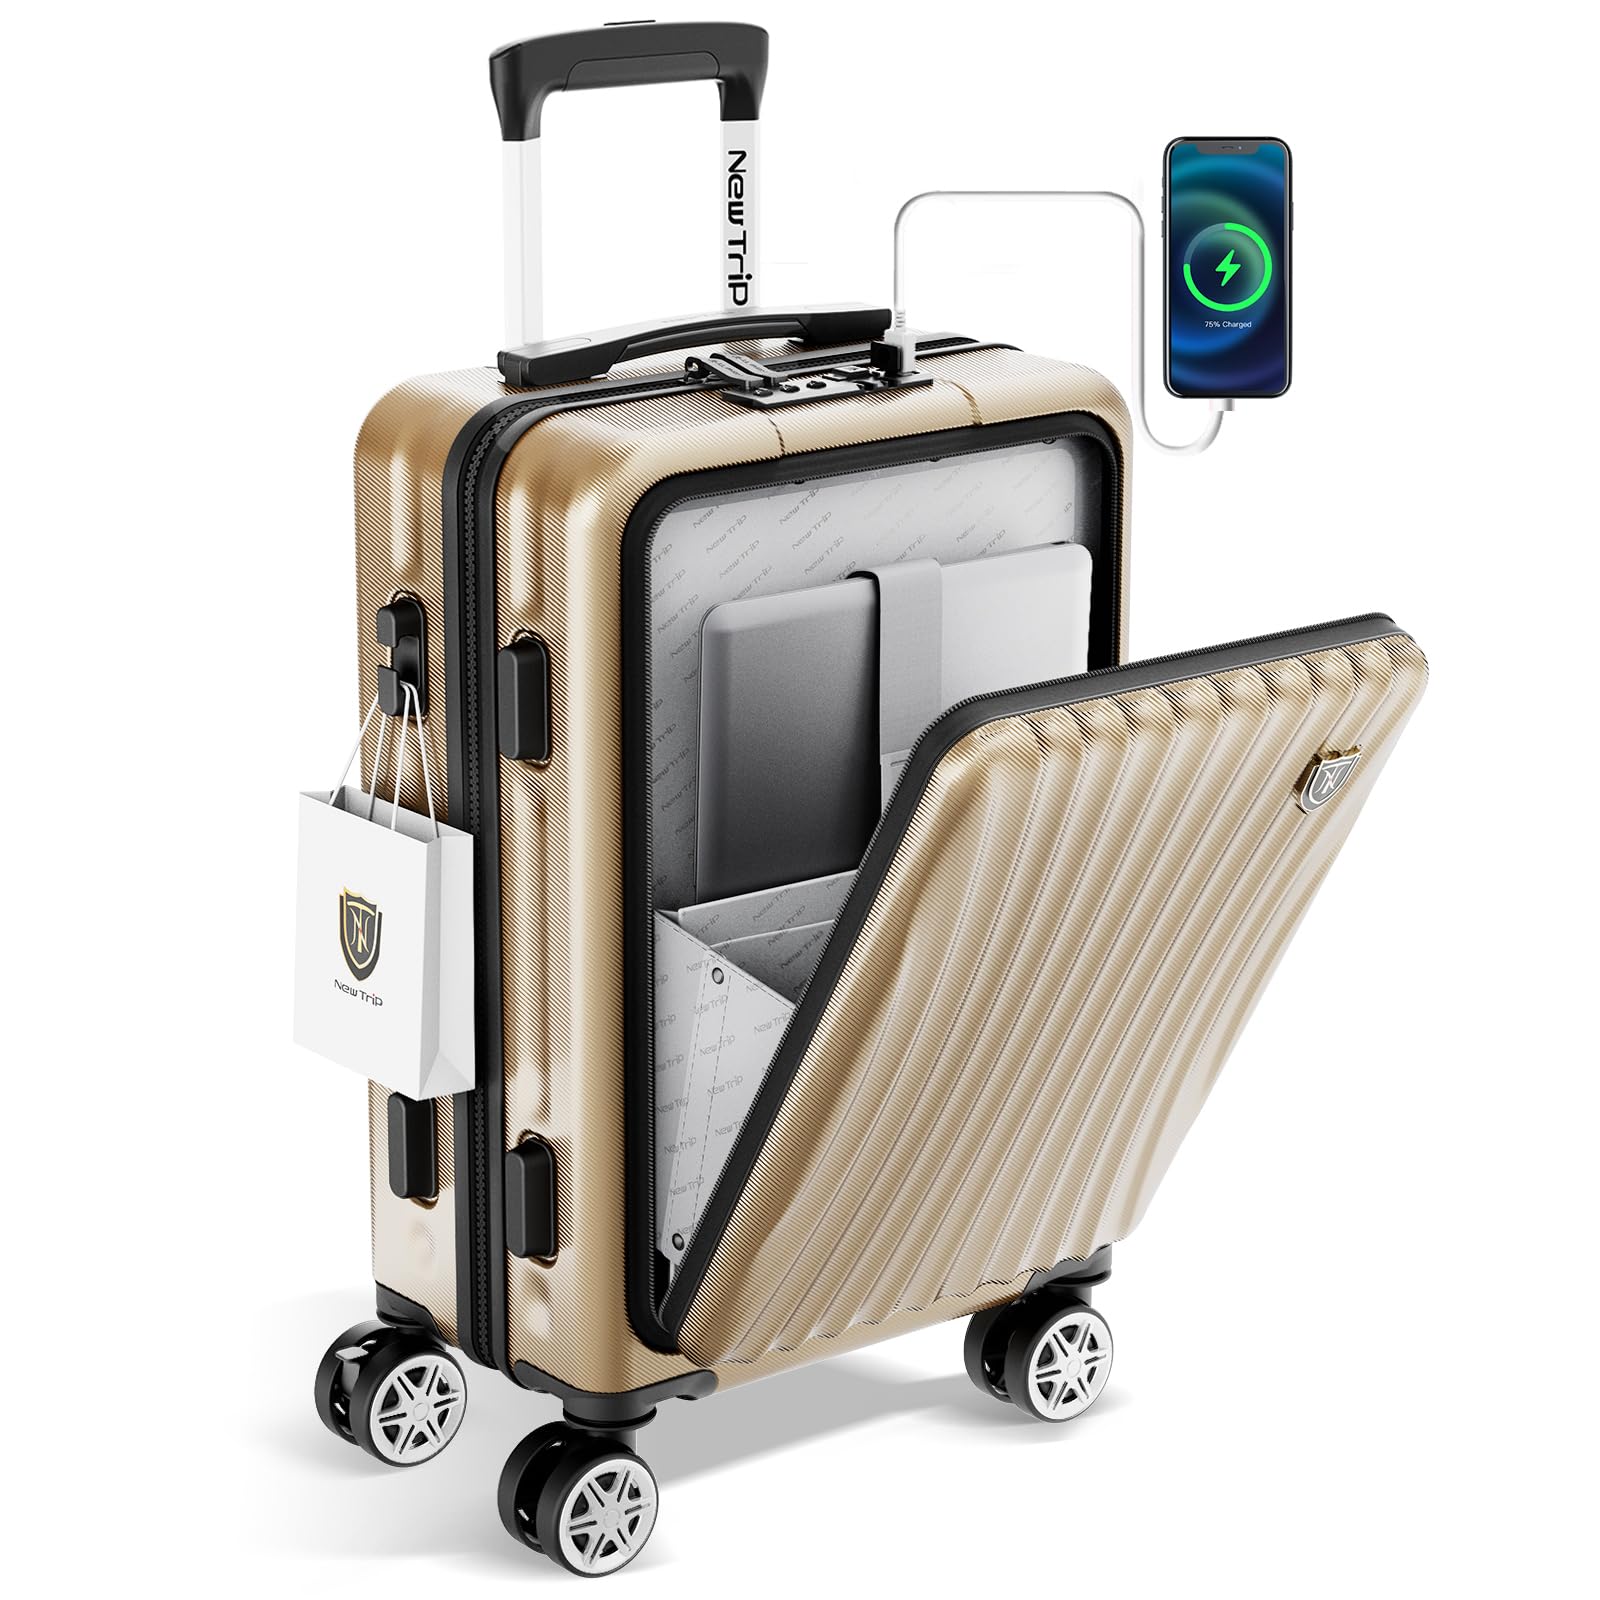 New Trip スーツケース フロントオープン キャリーケース 機内持ち込み 